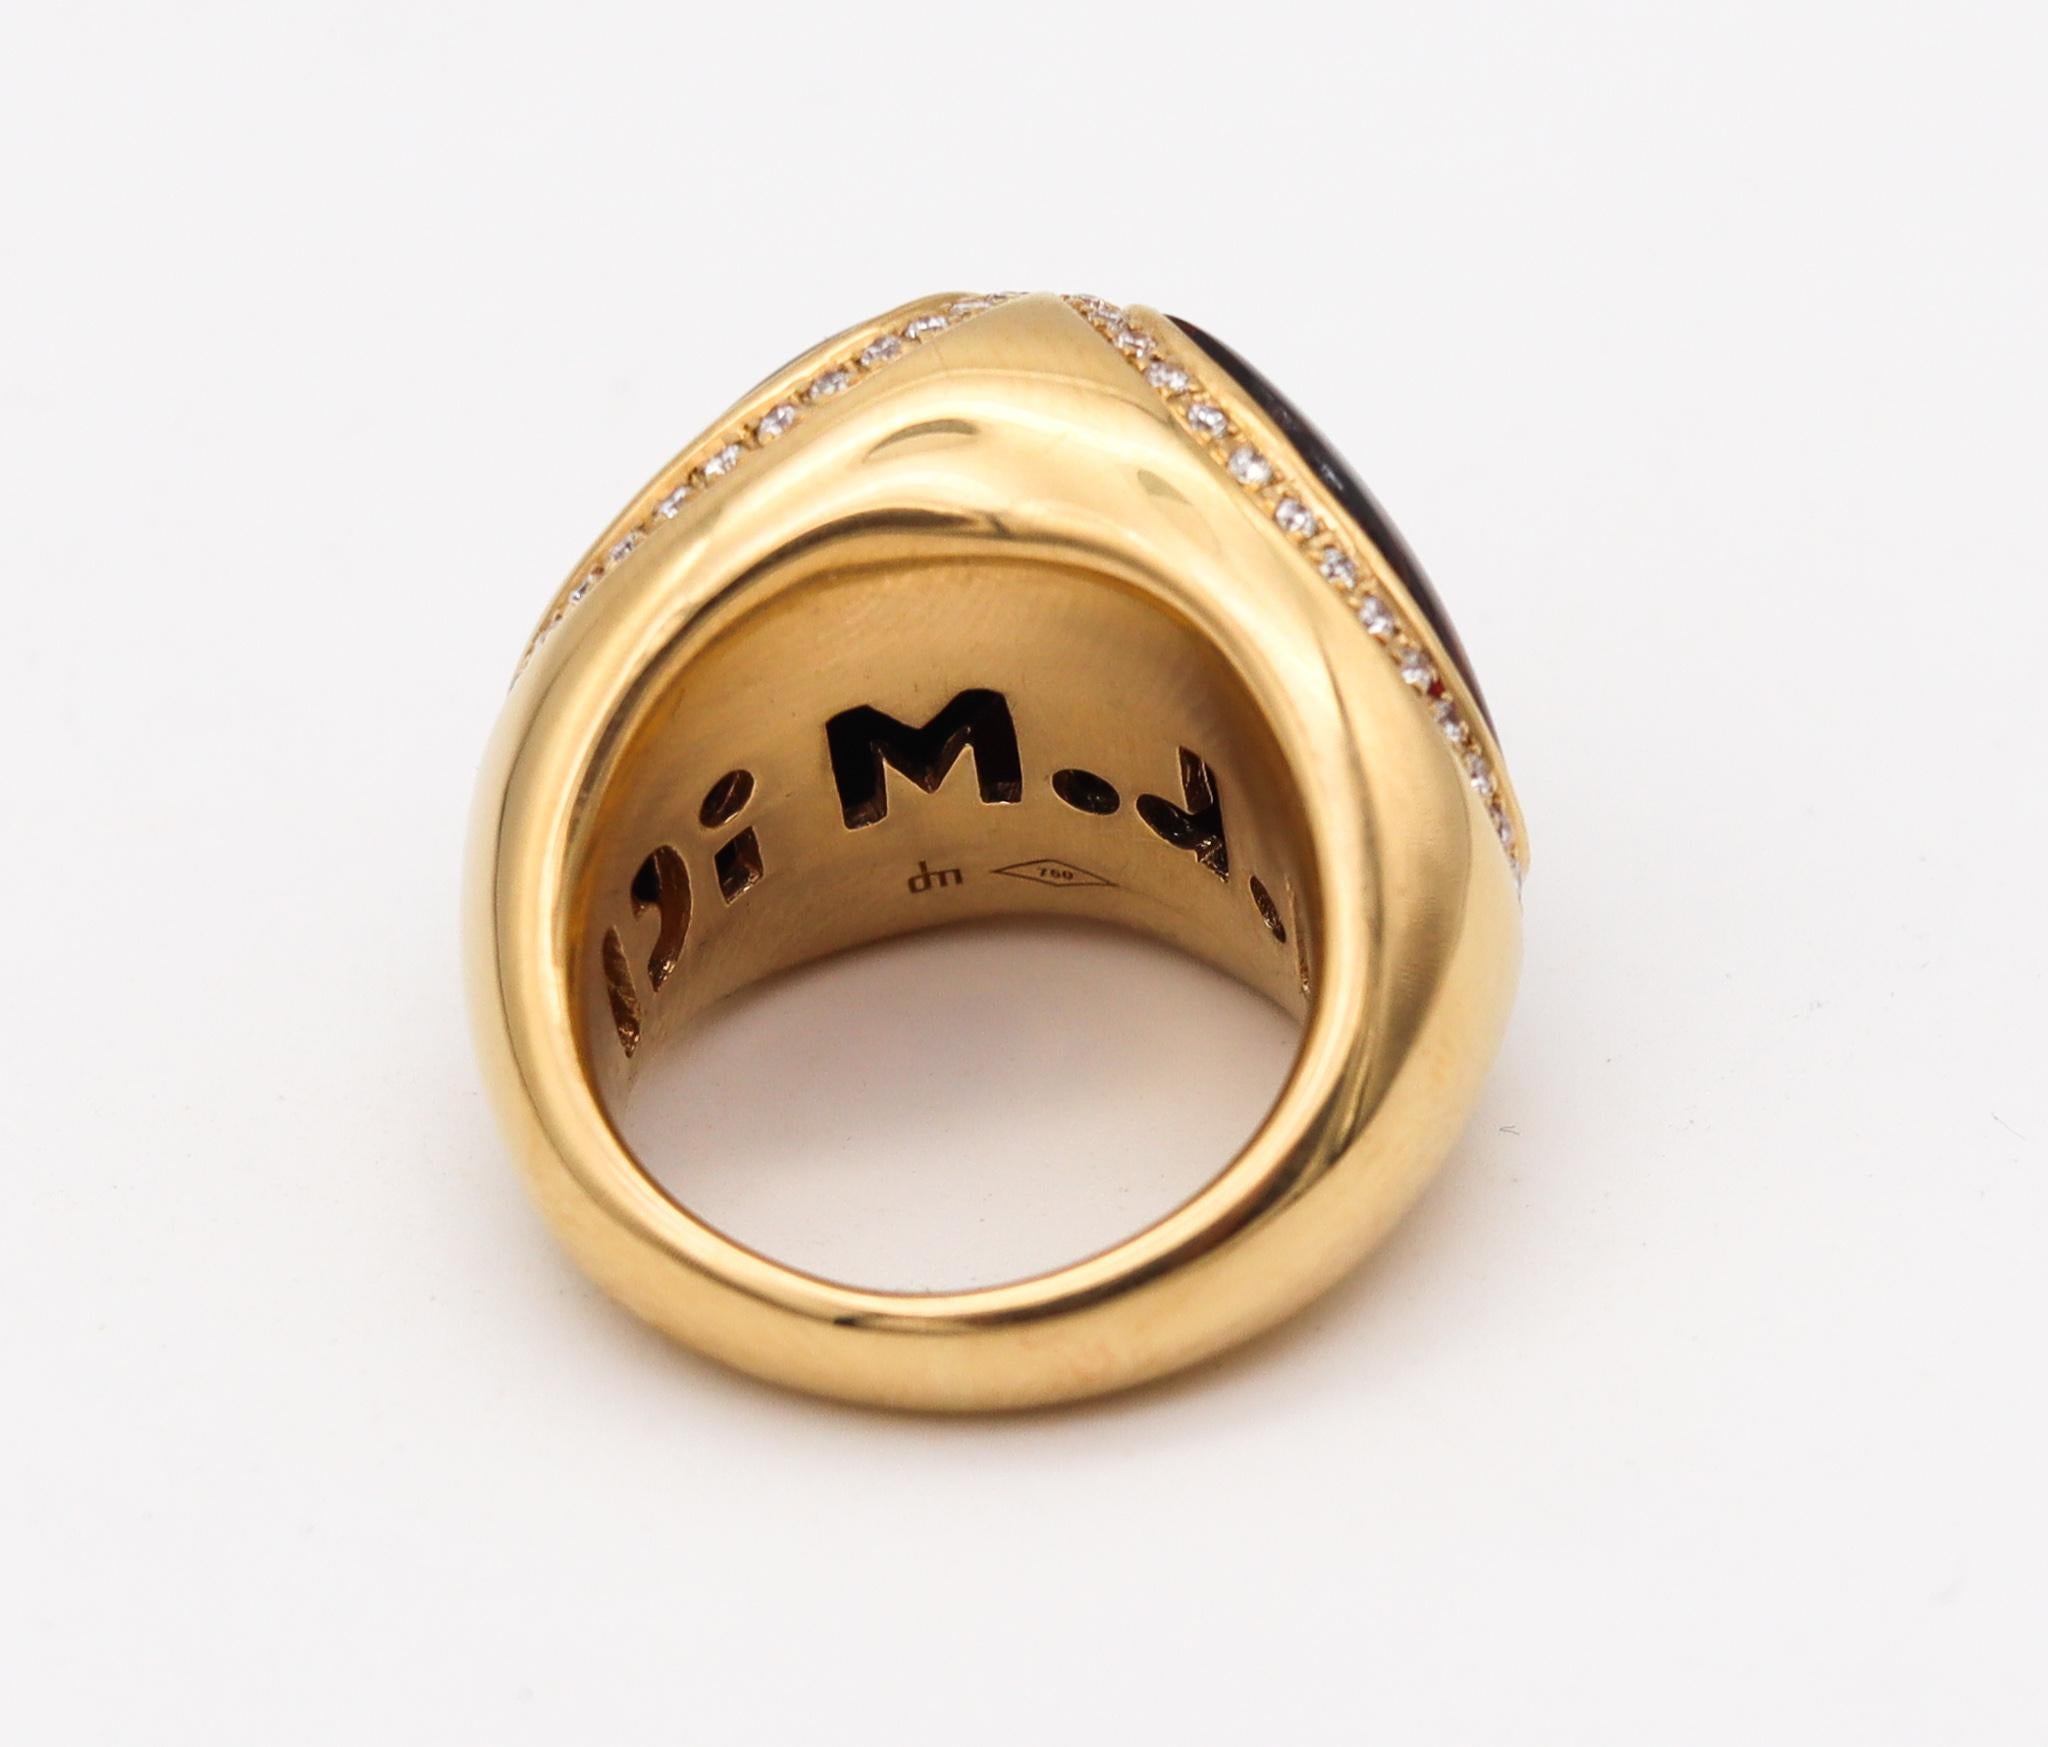 Di Modolo Cocktail Ring in 18Kt Gold With 28.65 Ctw Tiger Eye Quartz & Diamonds In Excellent Condition For Sale In Miami, FL